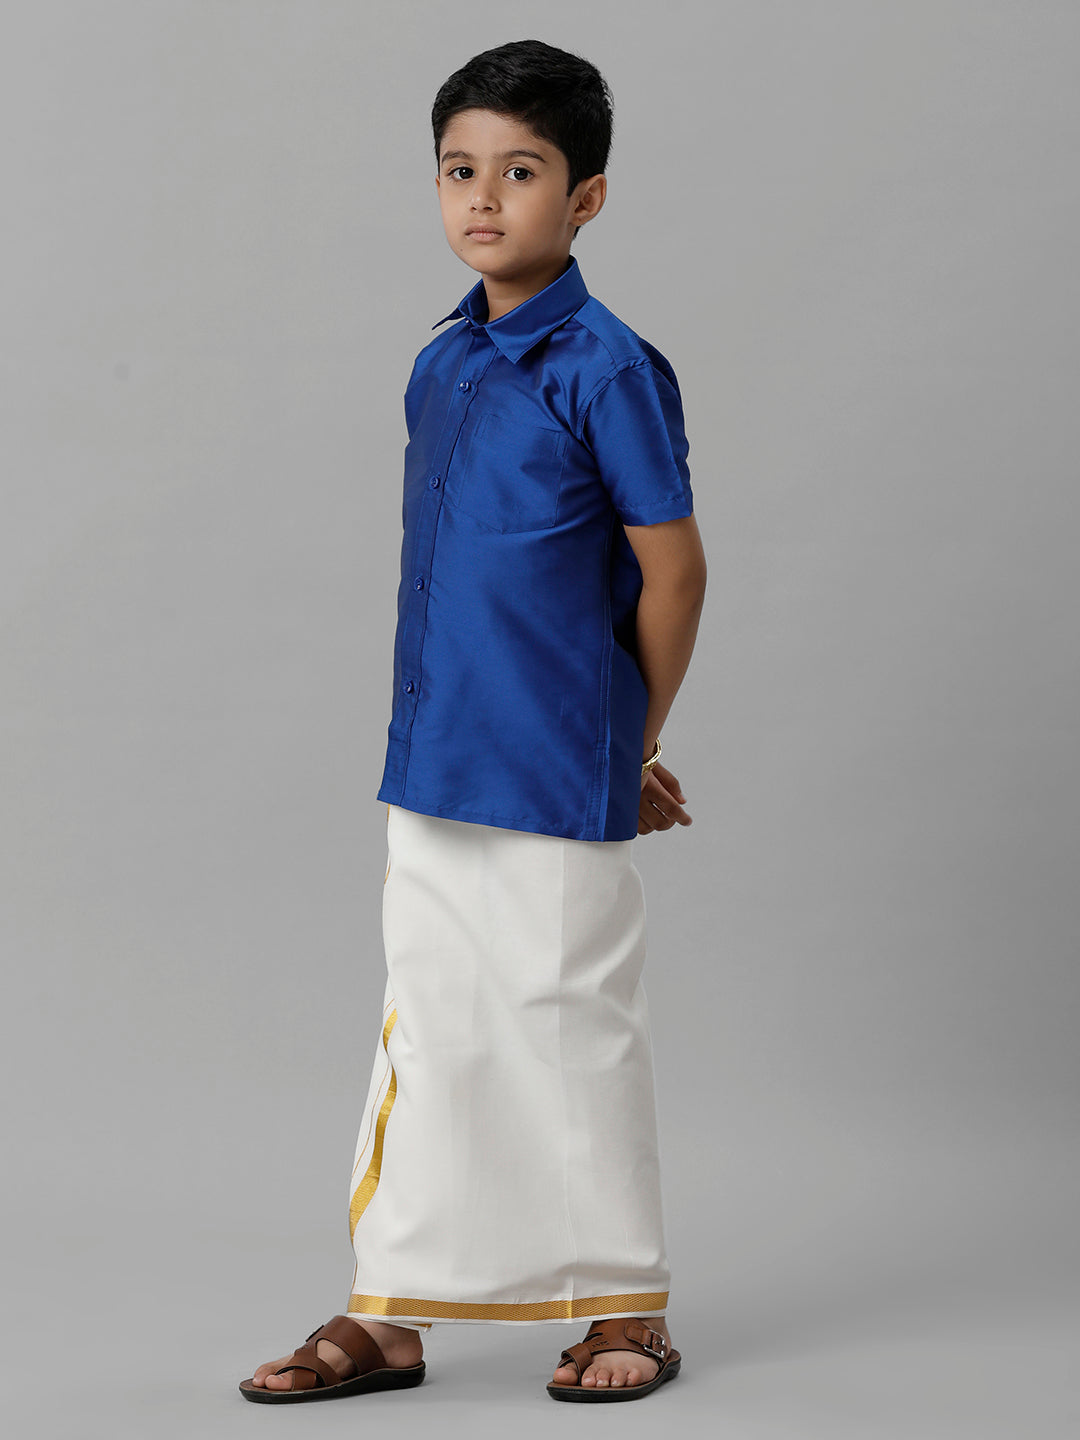 Boys Silk Cotton Light Blue Half Sleeves Shirt with Adjustable Cream Dhoti Combo K5-Side alternative view